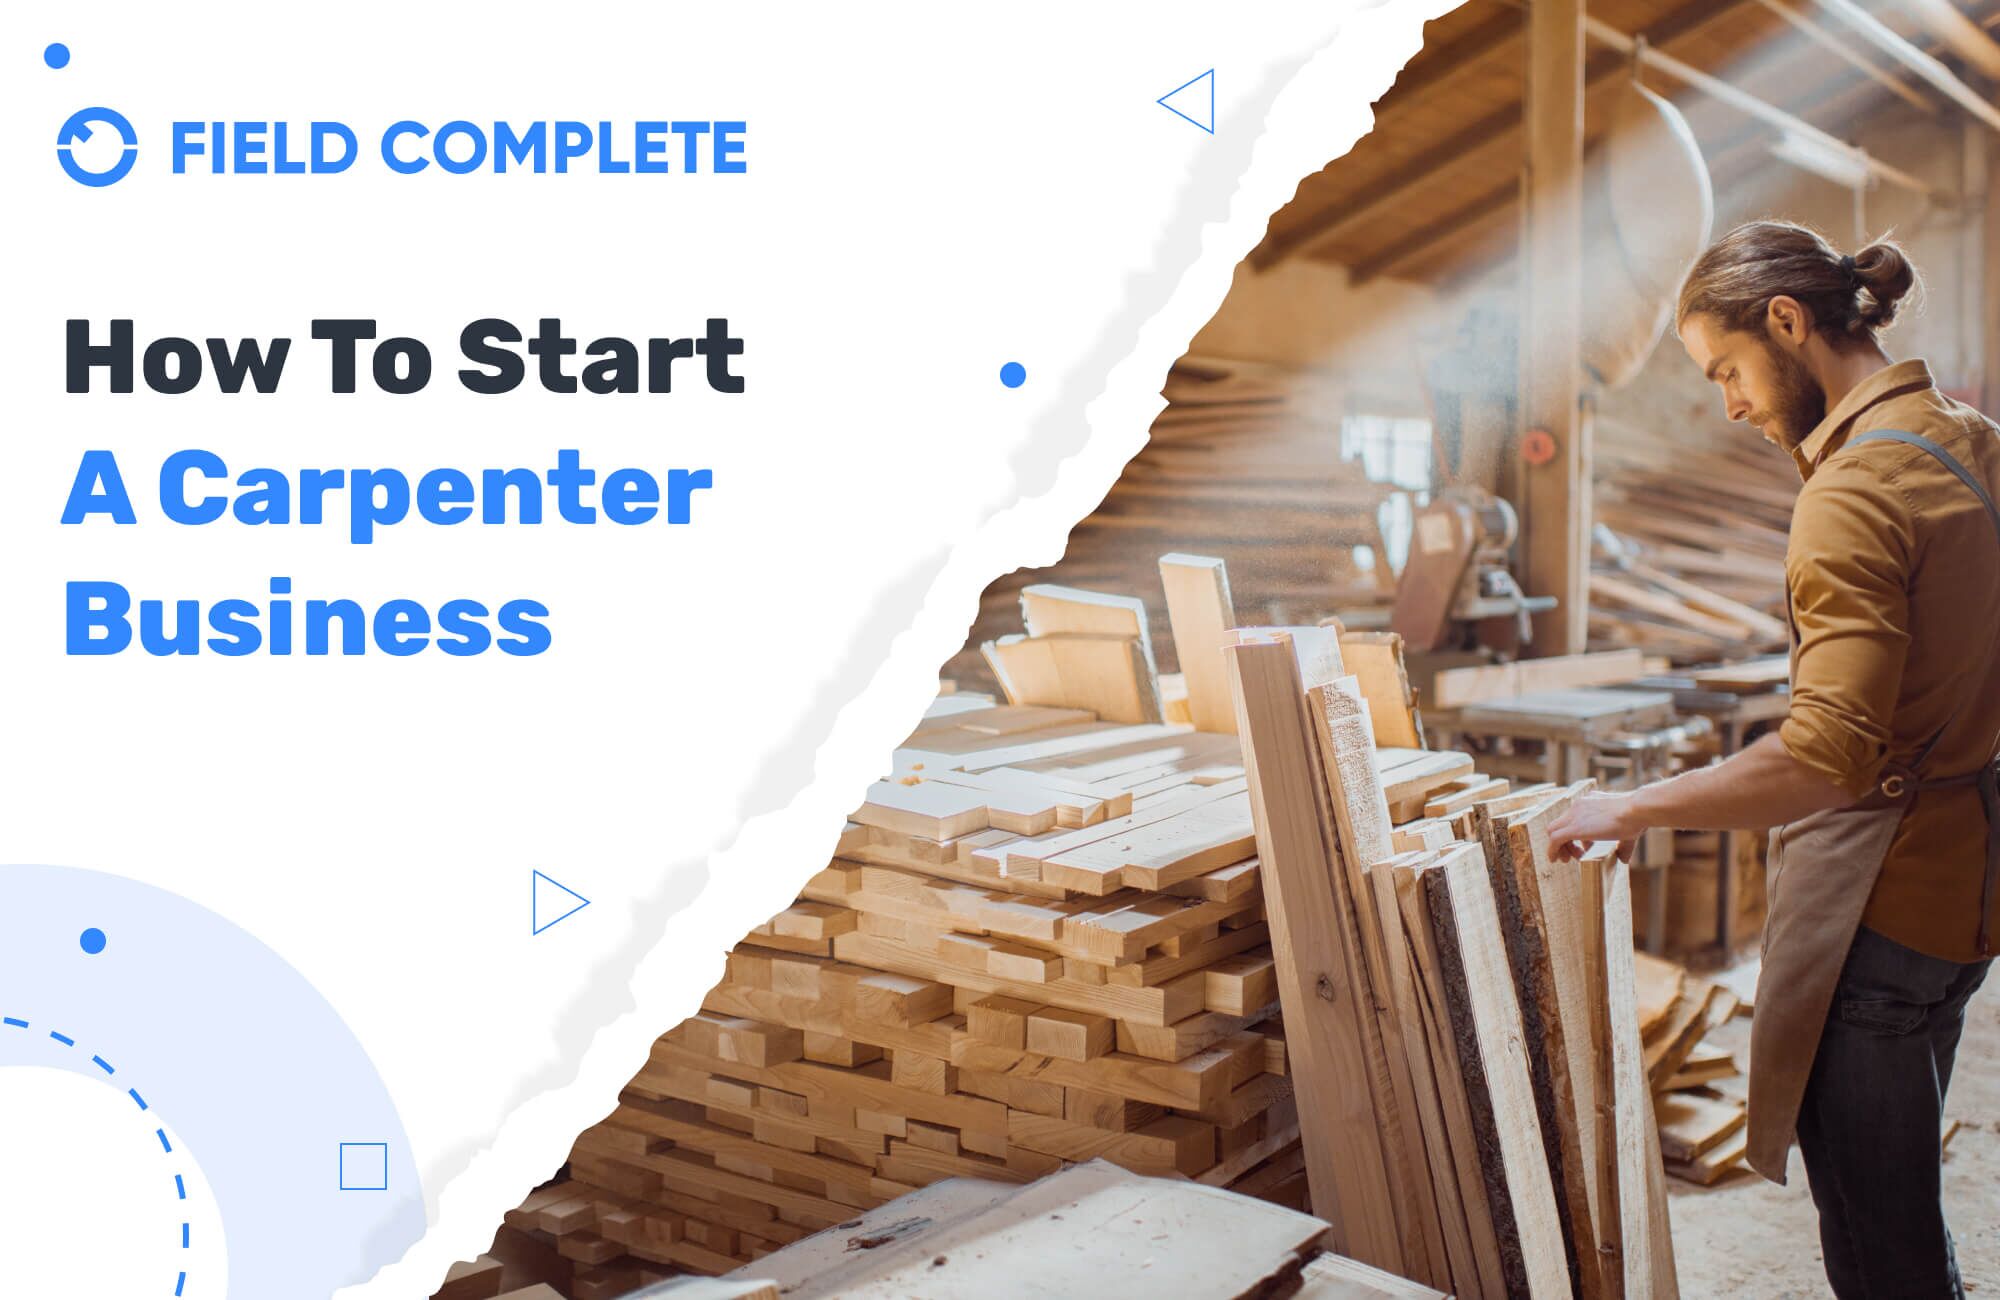 How To Start a Carpenter Business